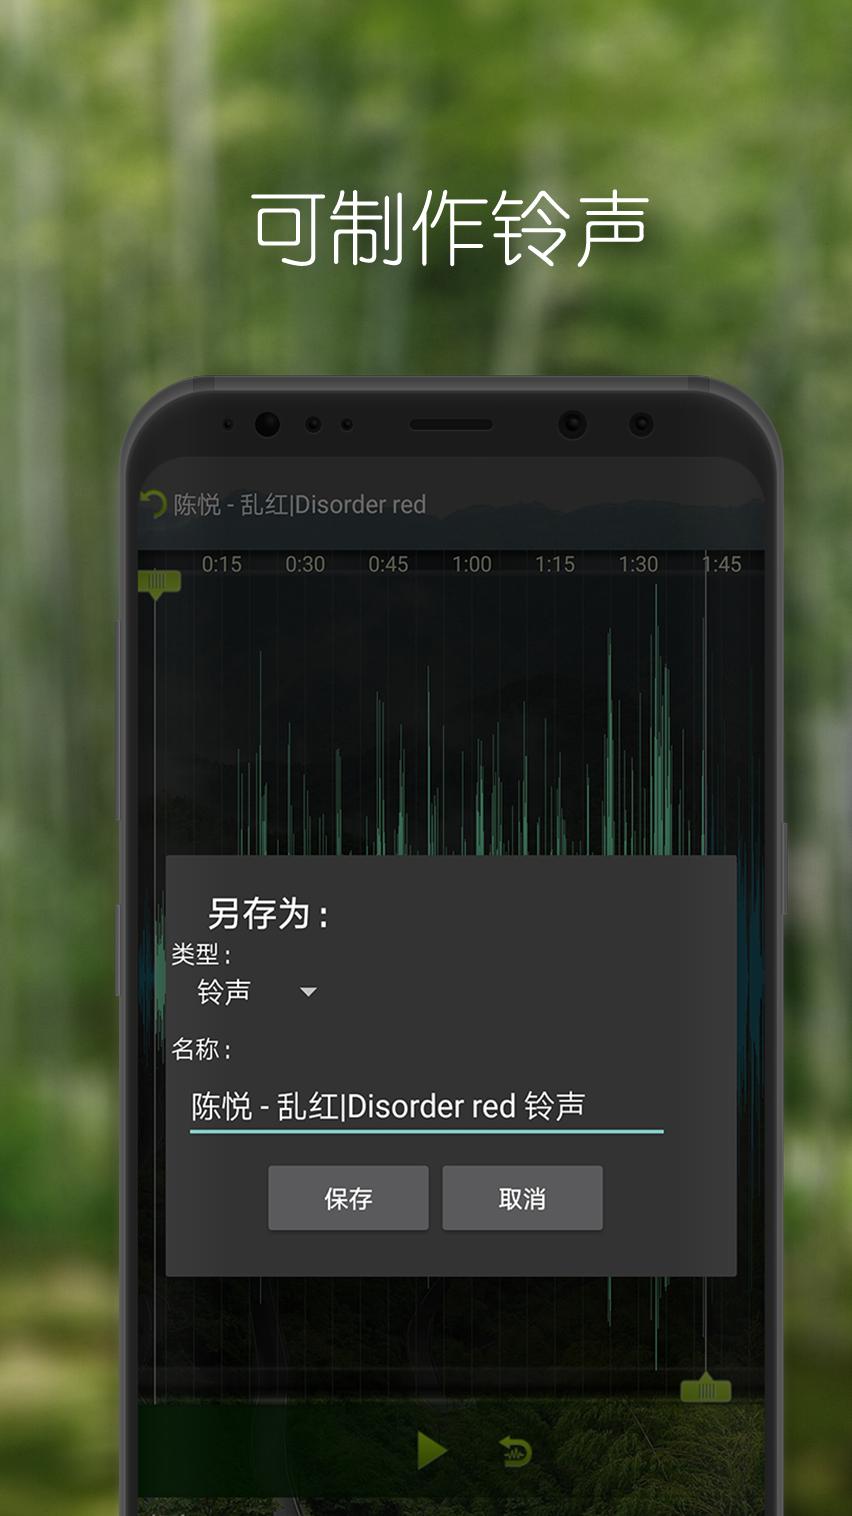 悠扬的笛子曲 290首可制作铃音pour Android Telechargez L Apk